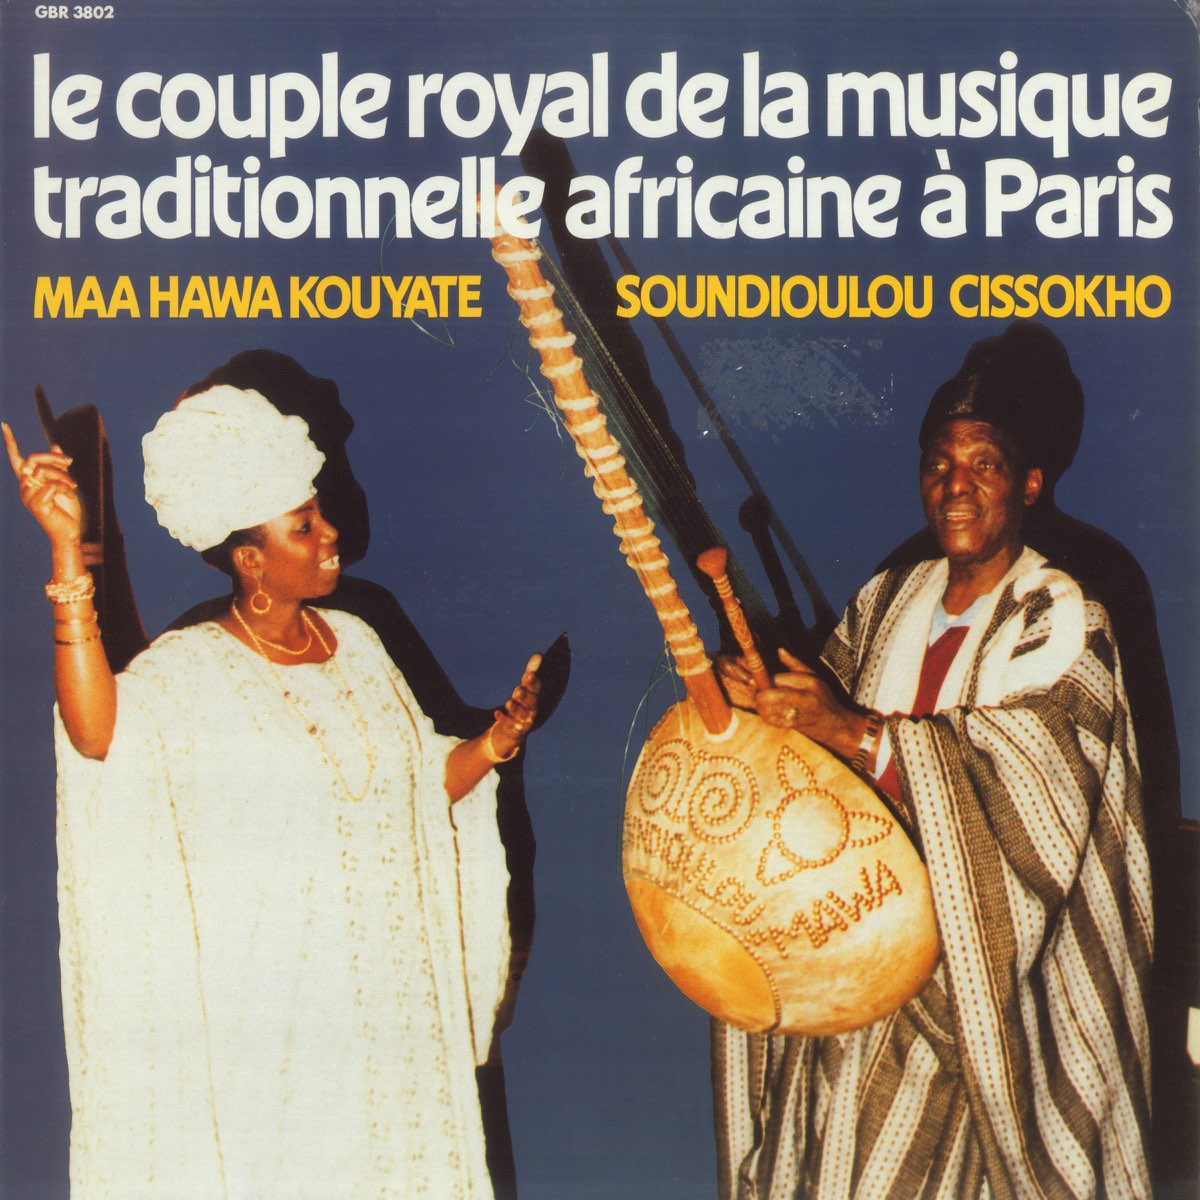 Le couple royal de la musique africaine - Album by Soundioulou Cissokho &  Maa Hawa Kouyate - Apple Music